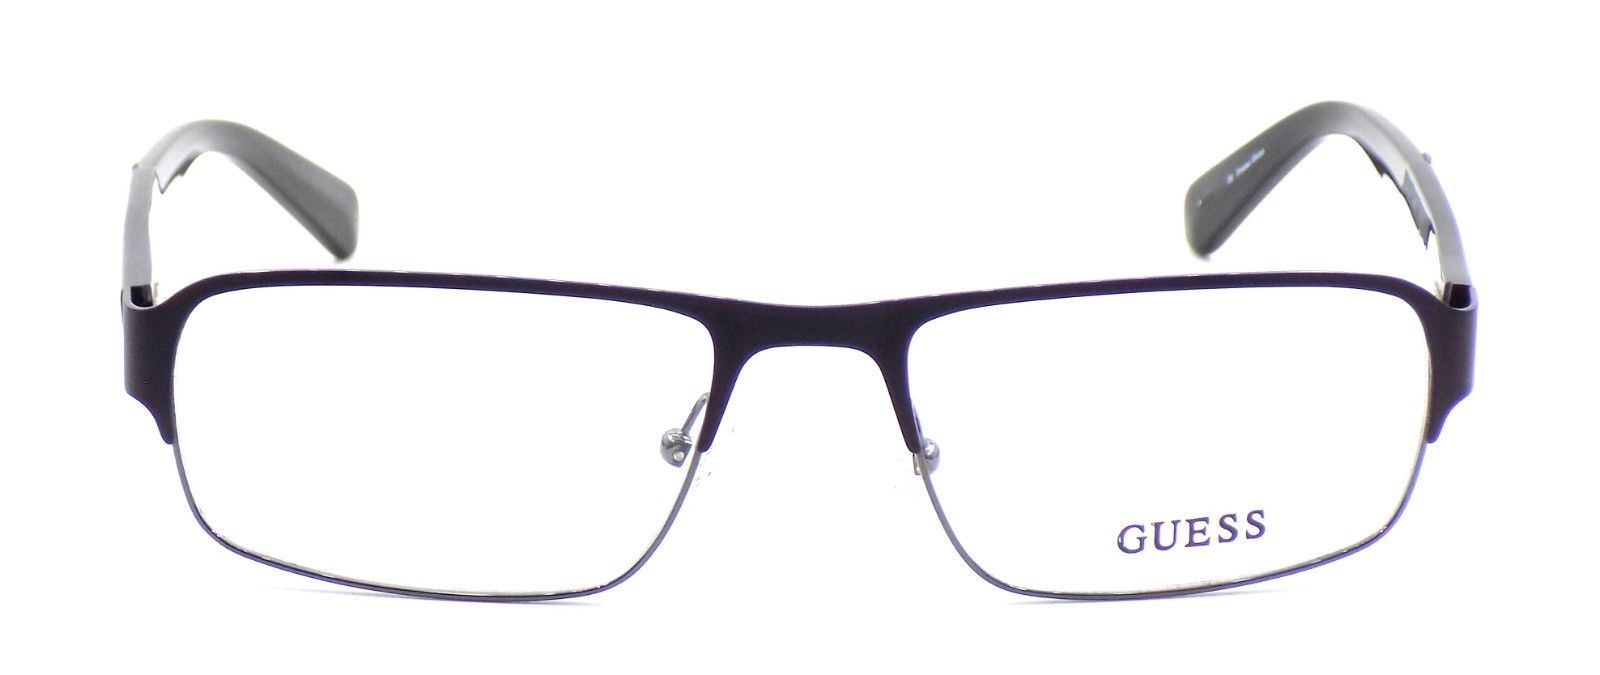 2-GUESS GU1836 BLK Unisex Eyeglasses Frames Metal 54-18-135 Satin Black + CASE-715583292932-IKSpecs